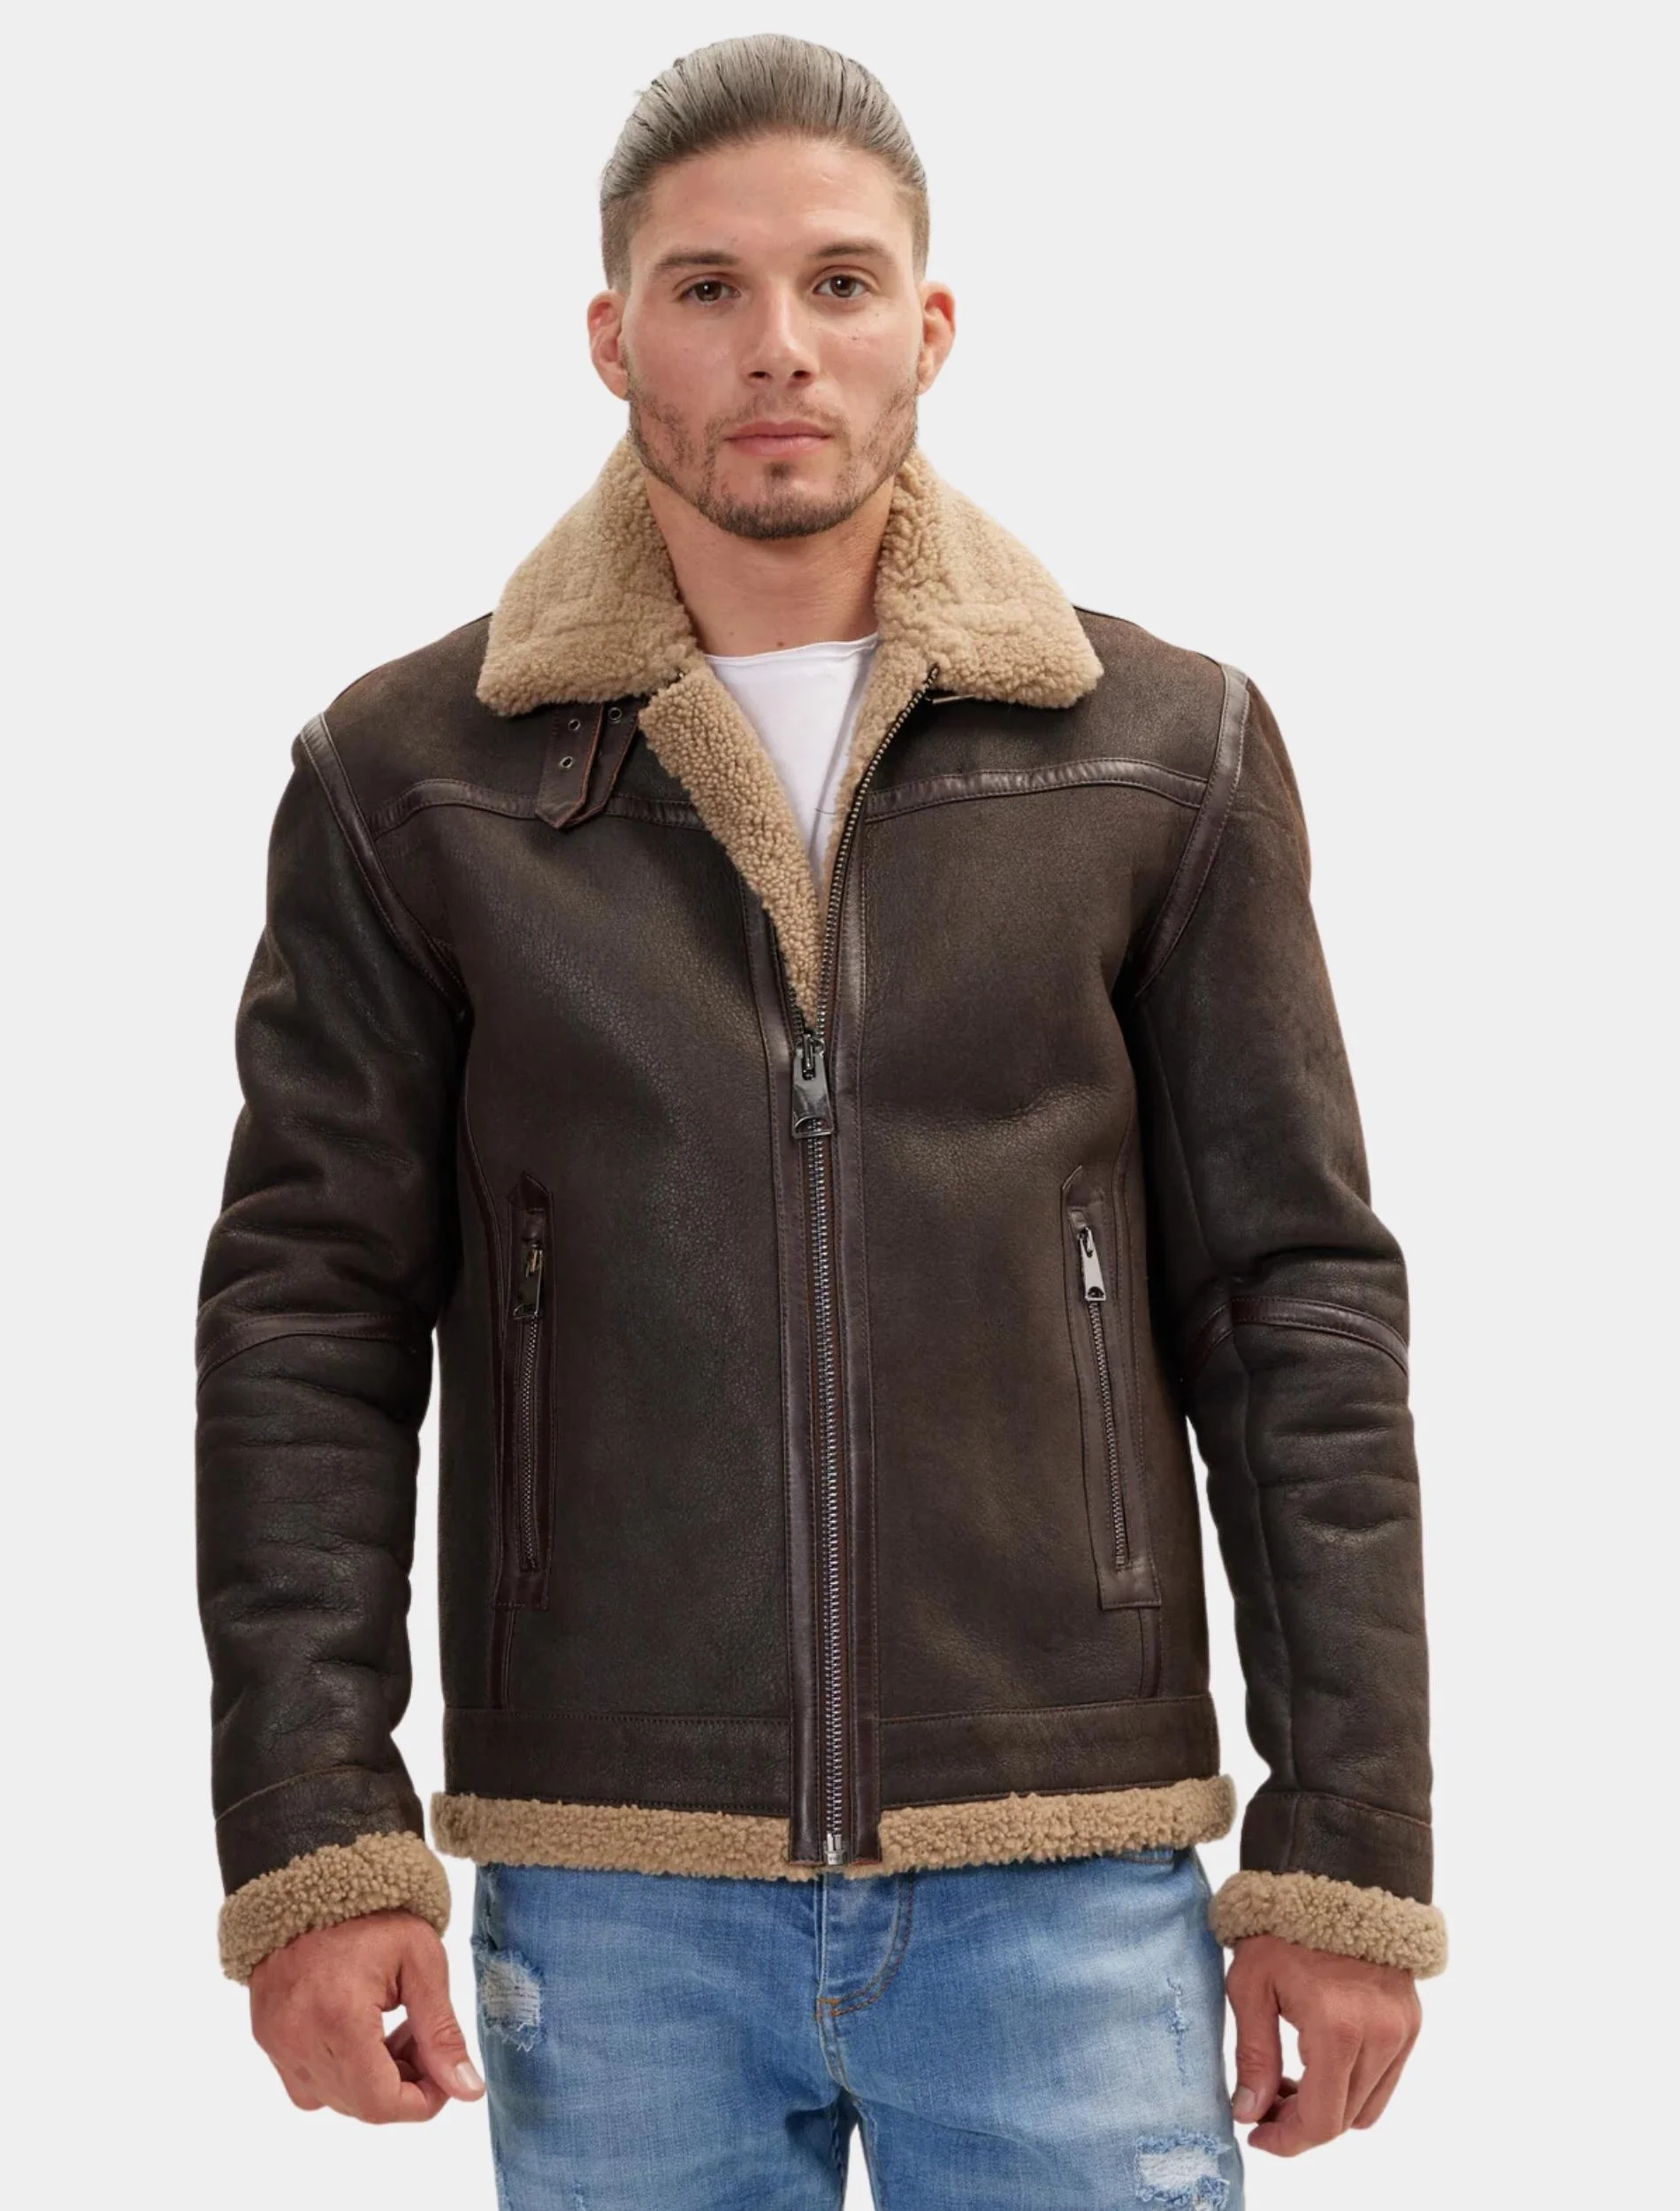 Enjoy Flat 20% OFF On Shearling Leather Jacket Mens